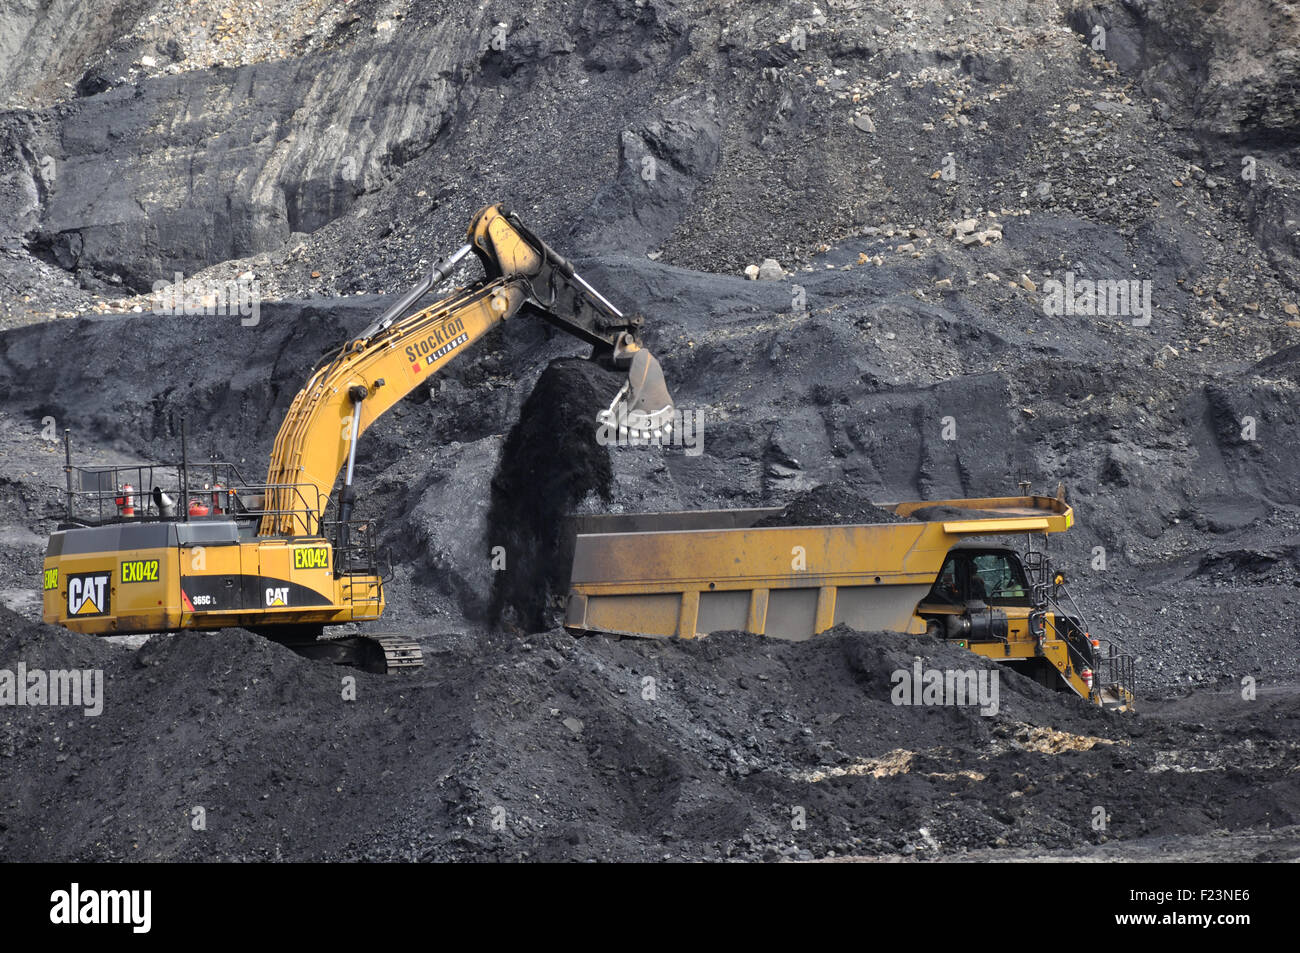 WESTPORT, Neuseeland, 31. August 2013: A 40-Tonnen-Bagger lädt Kohle in einen LKW in Stockton Tagebau Kohlemine Stockfoto